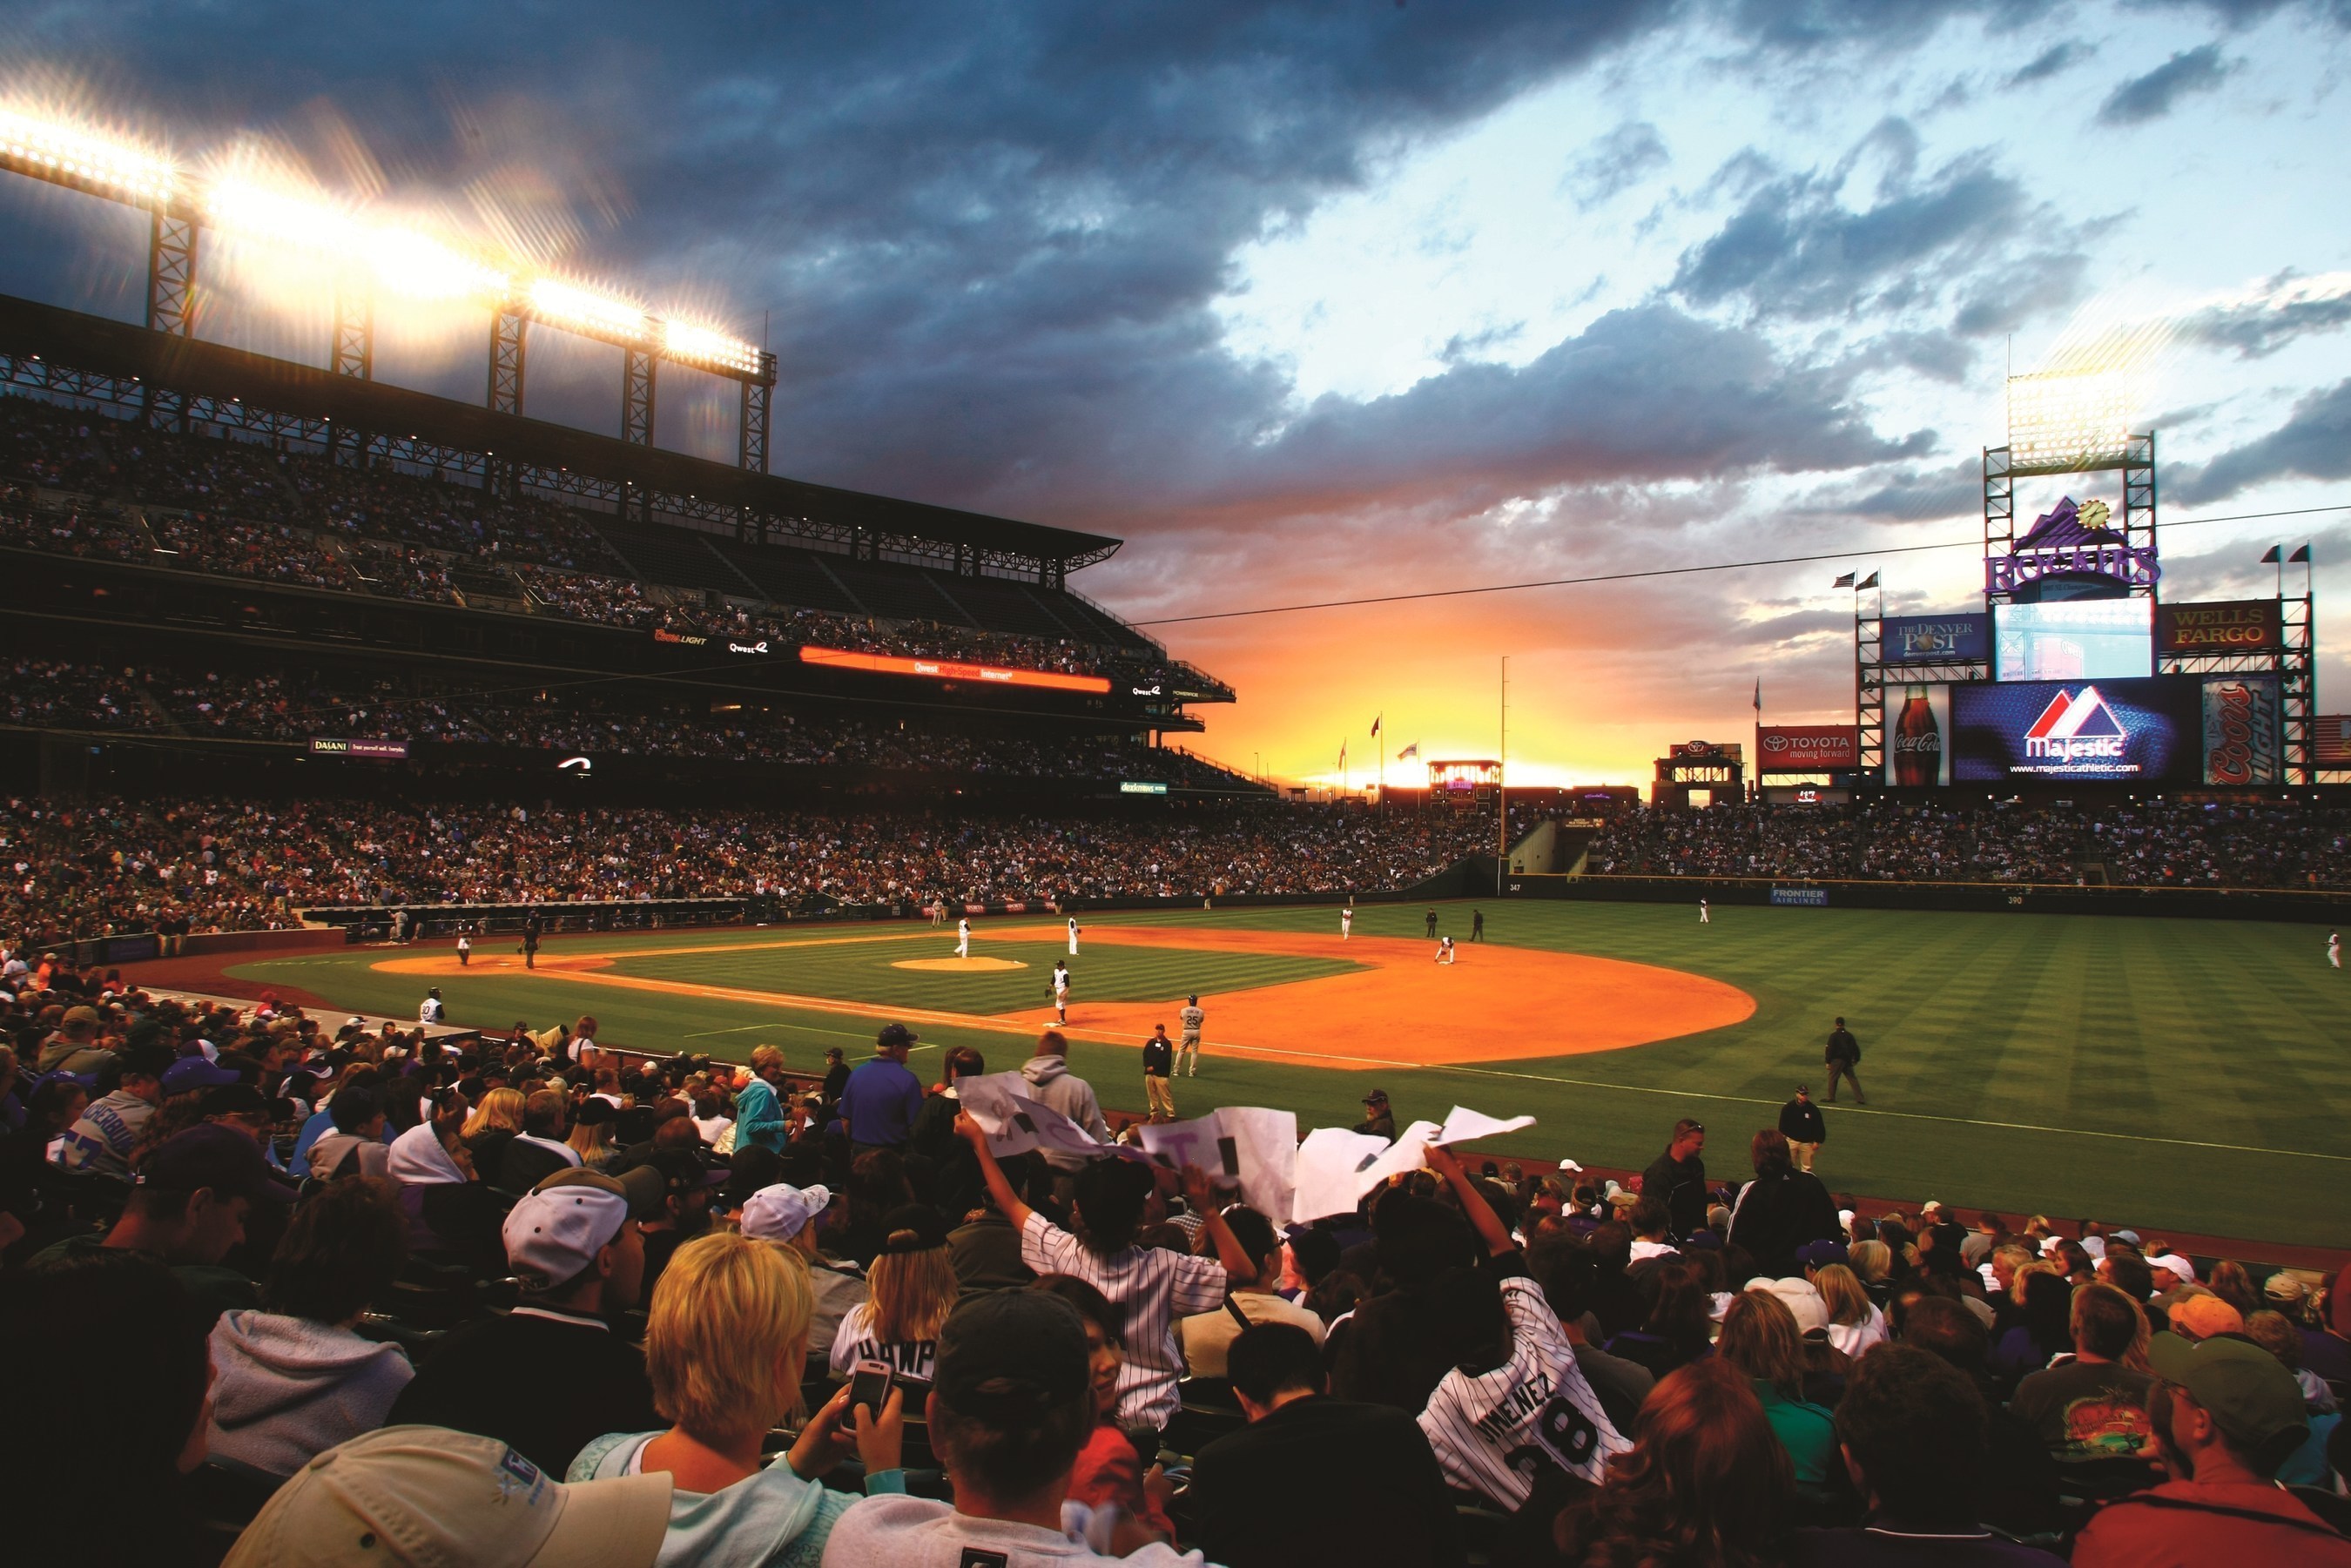 Sunset over Denver's Coors Field, home of Major League Baseball's Colorado Rockies. Credit: VISIT DENVER